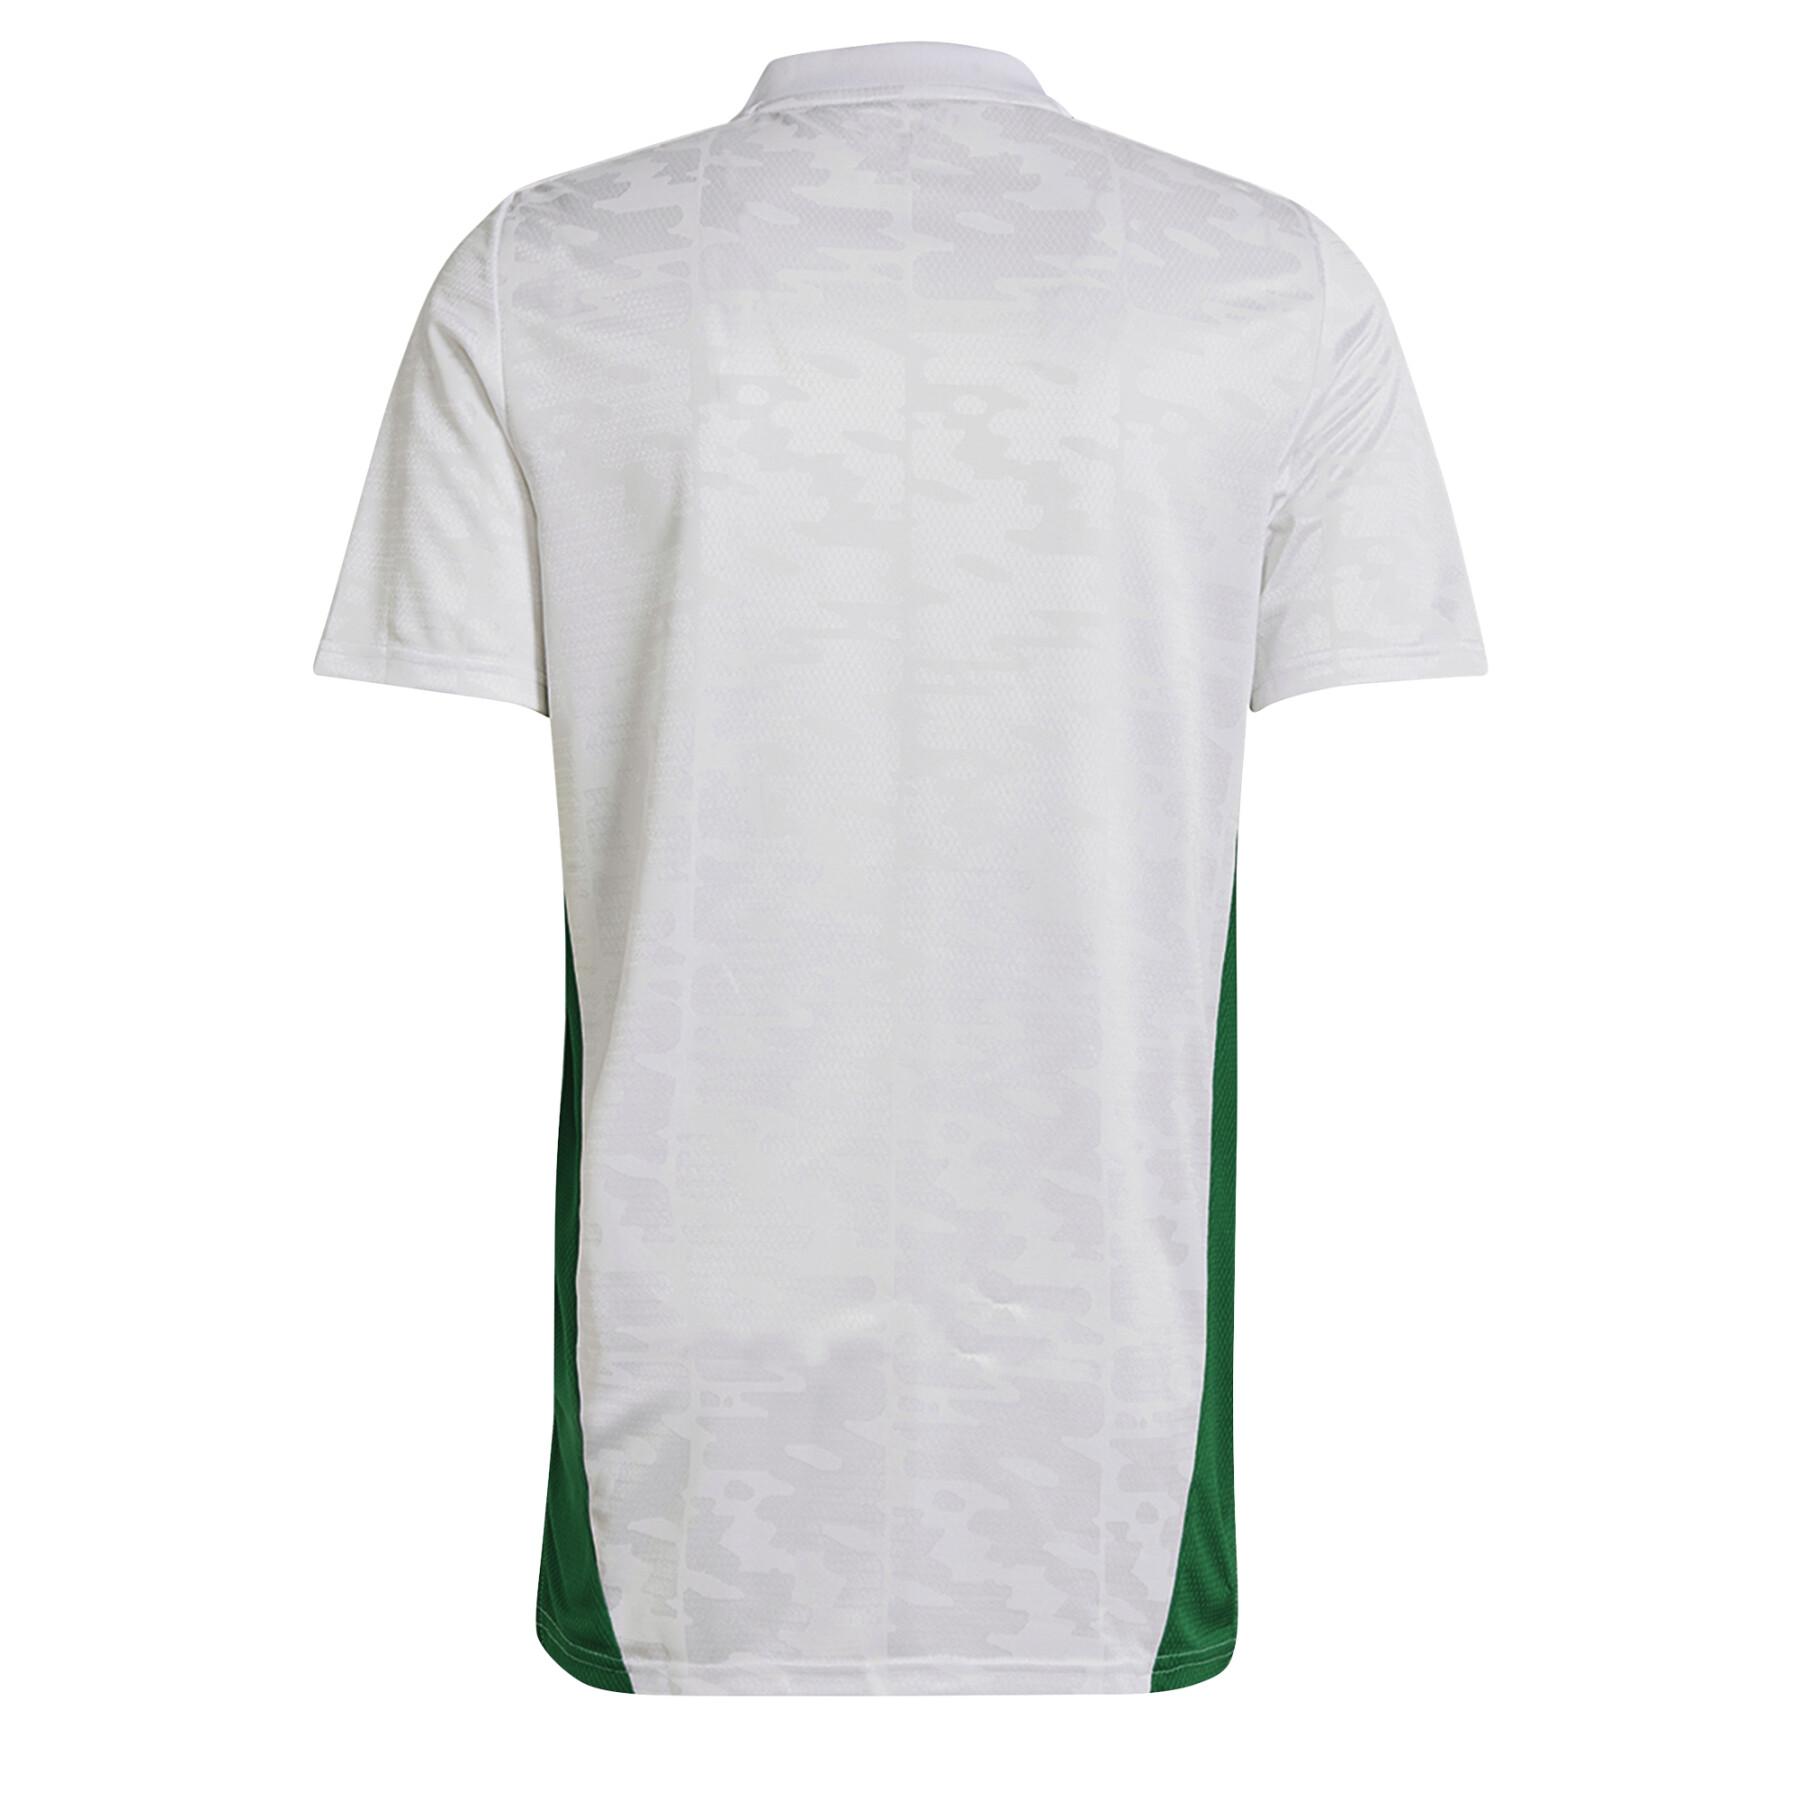 Koszulka domowa Algérie 2020/21